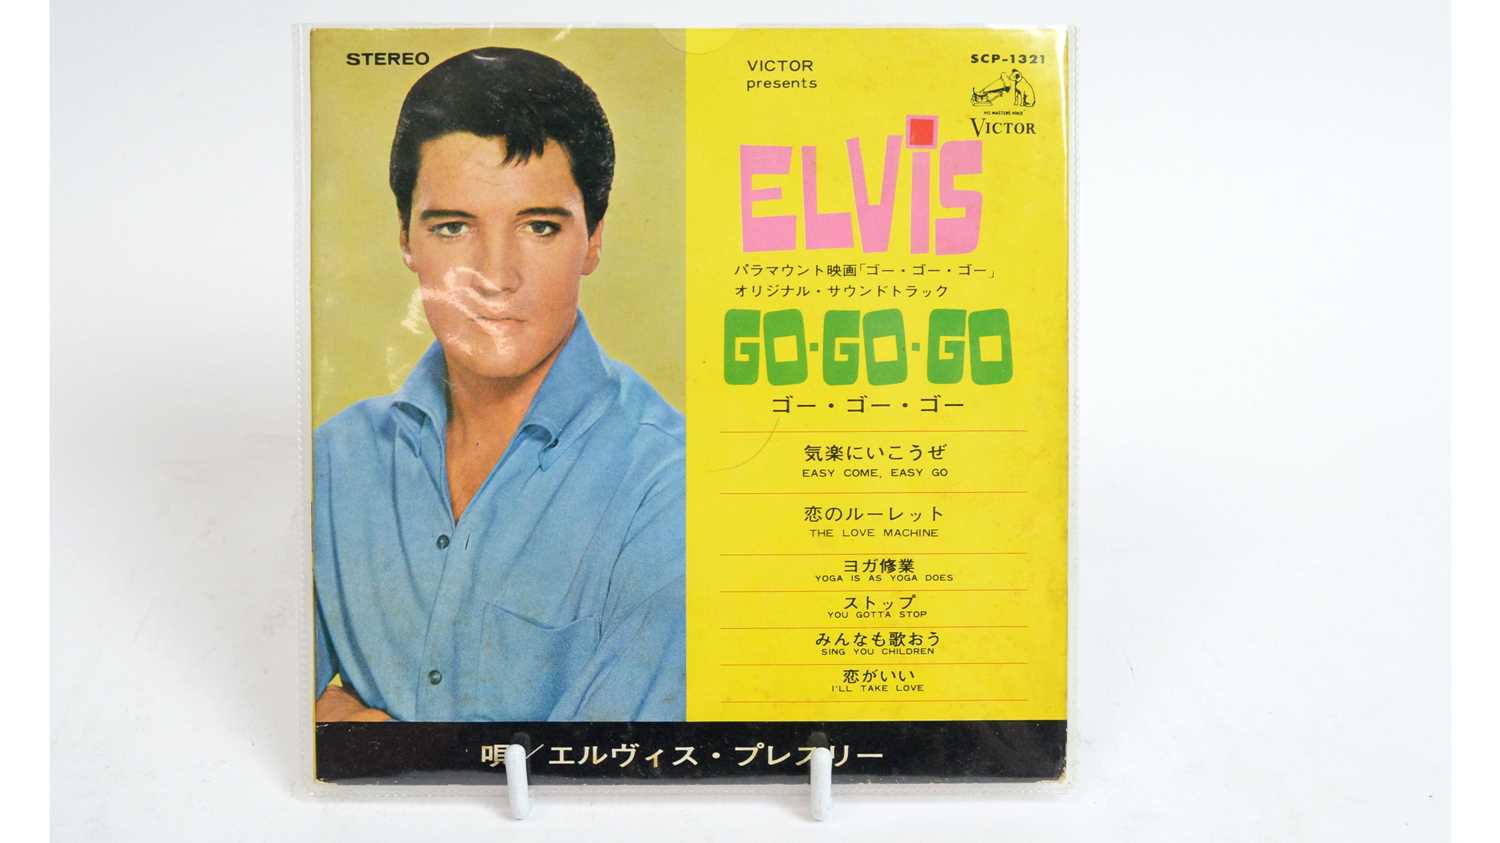 Lot 381 - Japanese pressing of Elvis Go Go Go